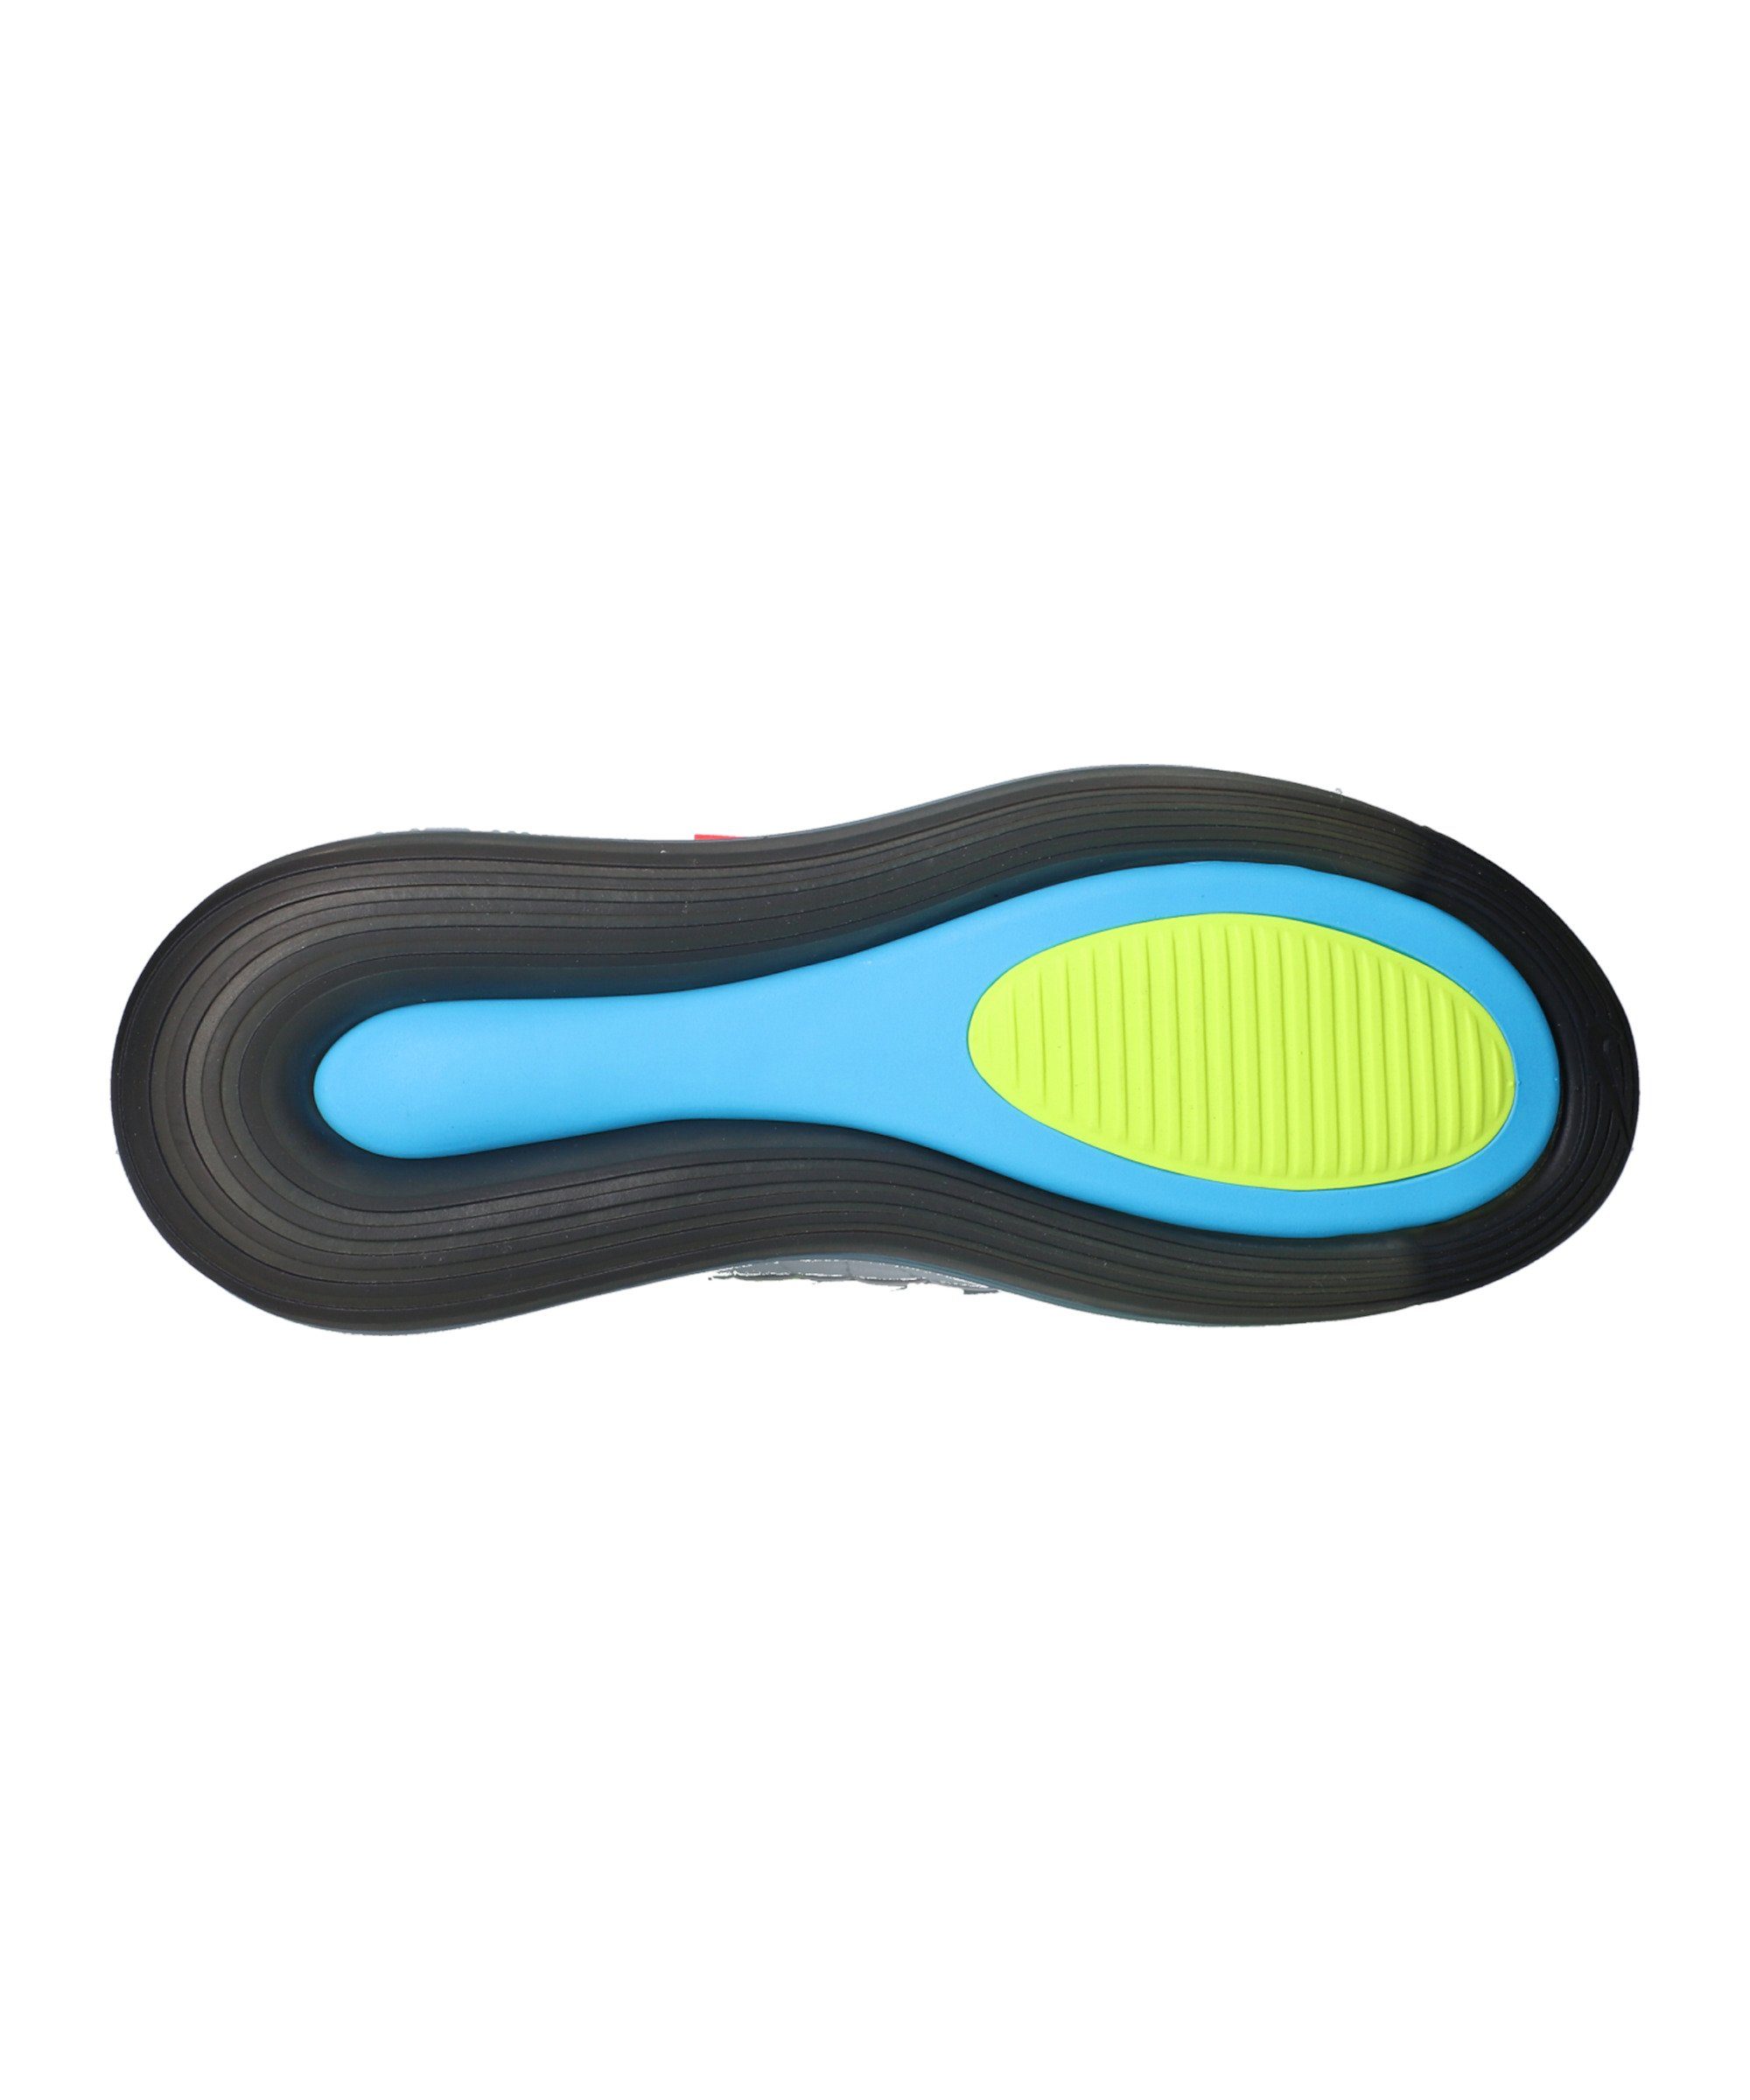 Nike Sportswear Air Max 720 Sneaker online kaufen | OTTO